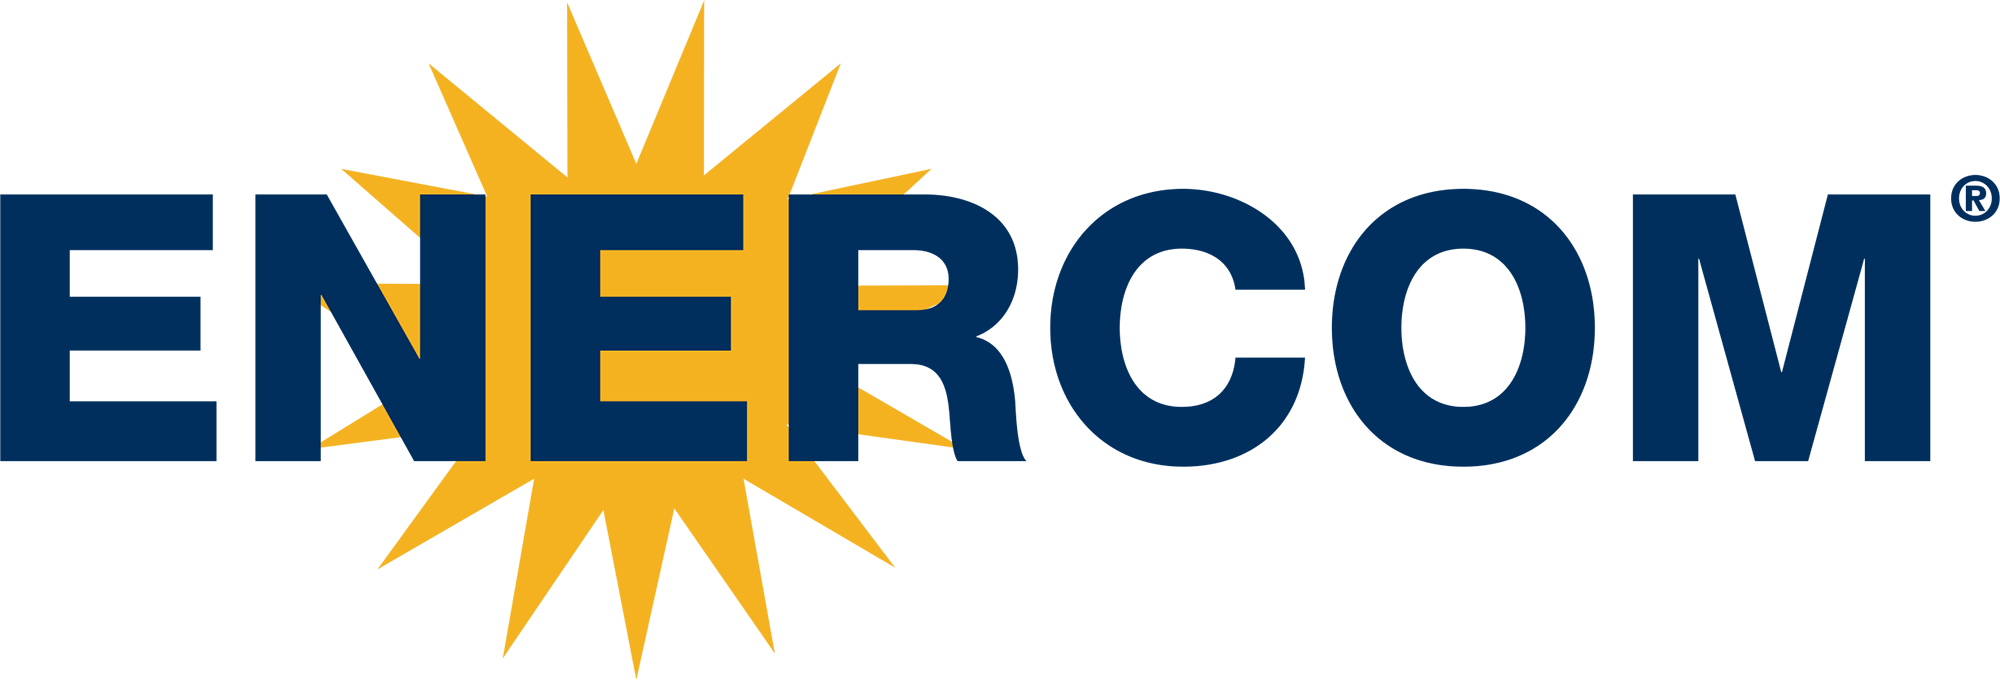 EnerCom, Inc.